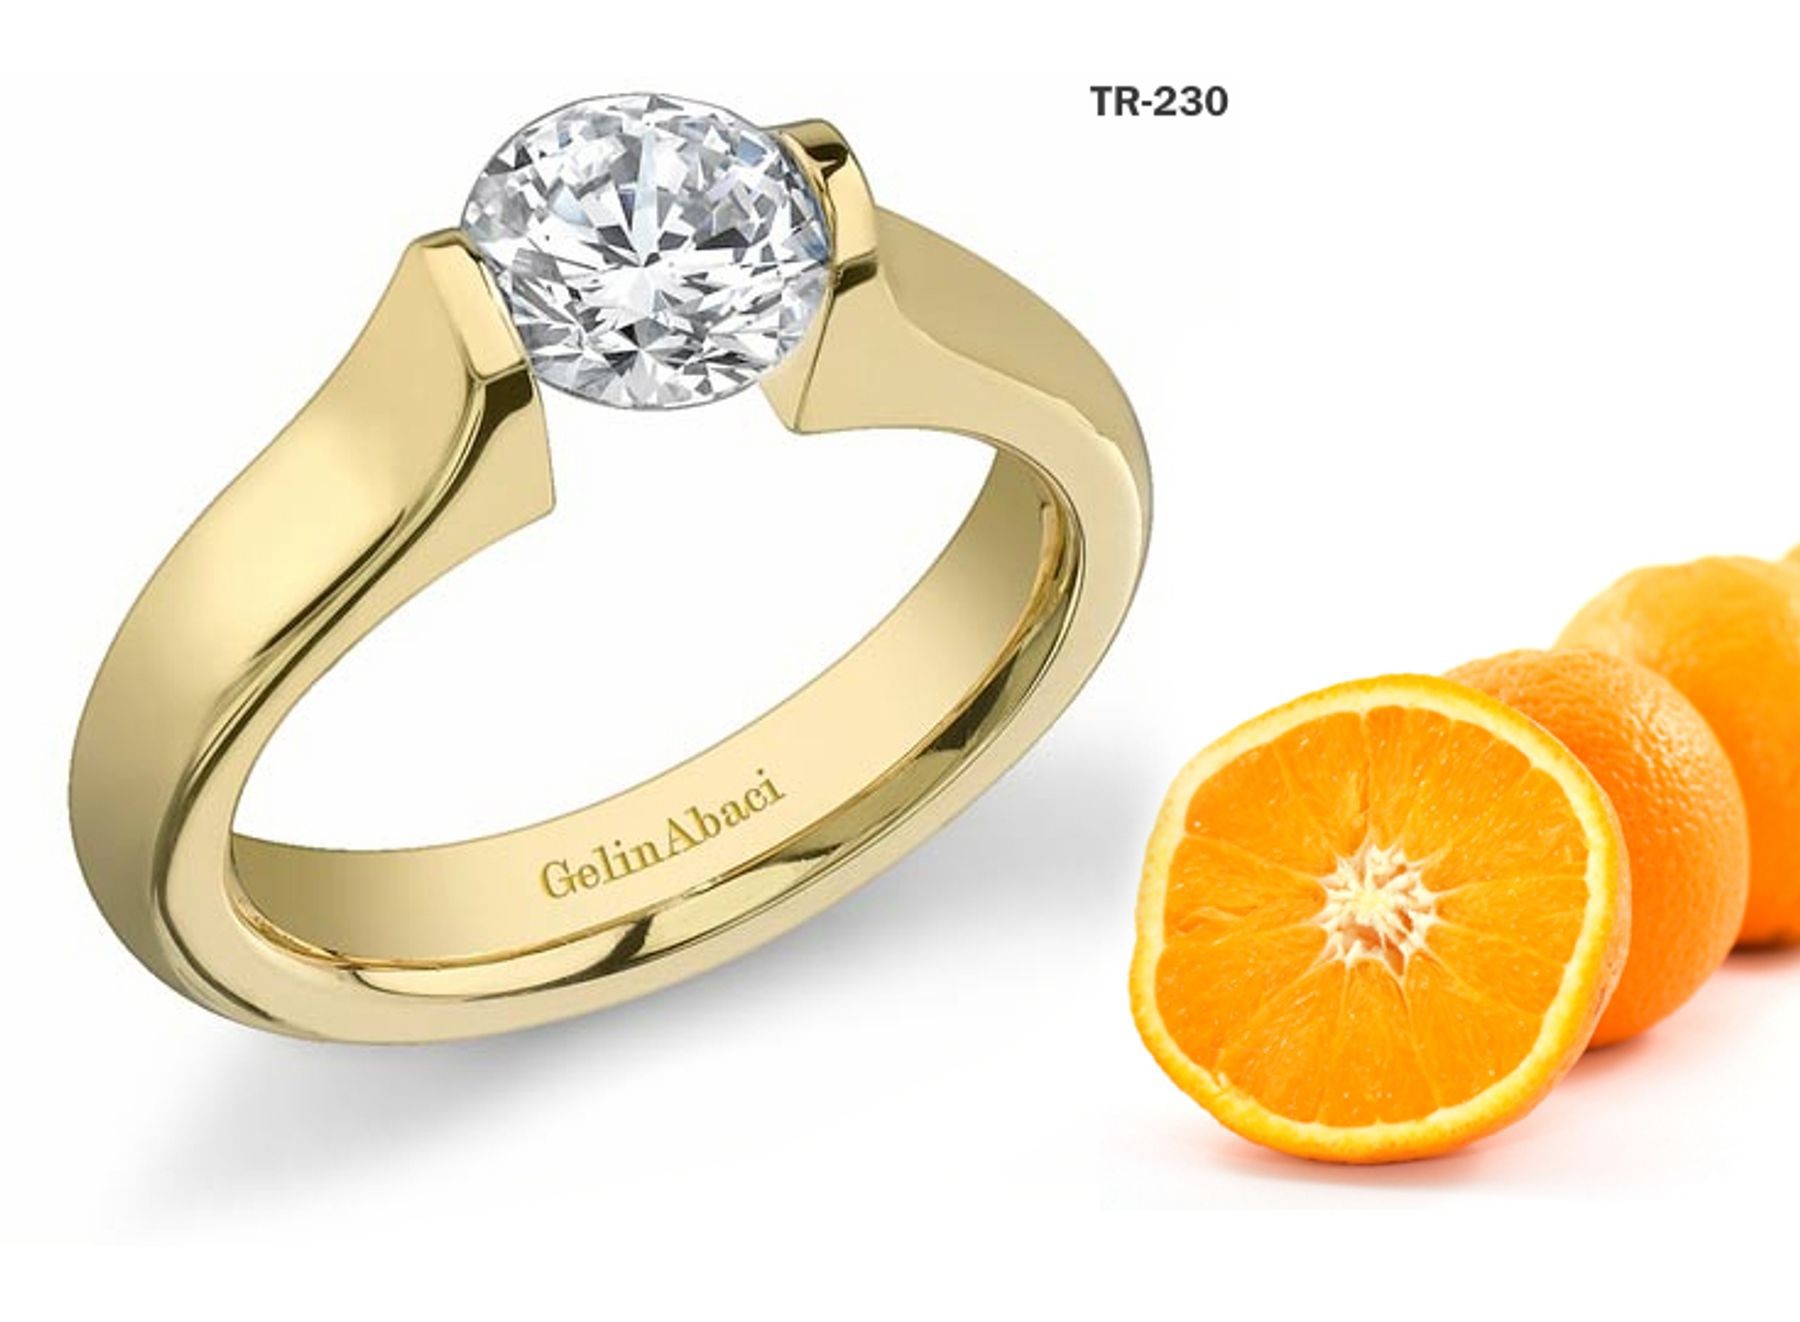 Platinum Settings: Tension Set Diamond and Precious Gemstone Women's Rings